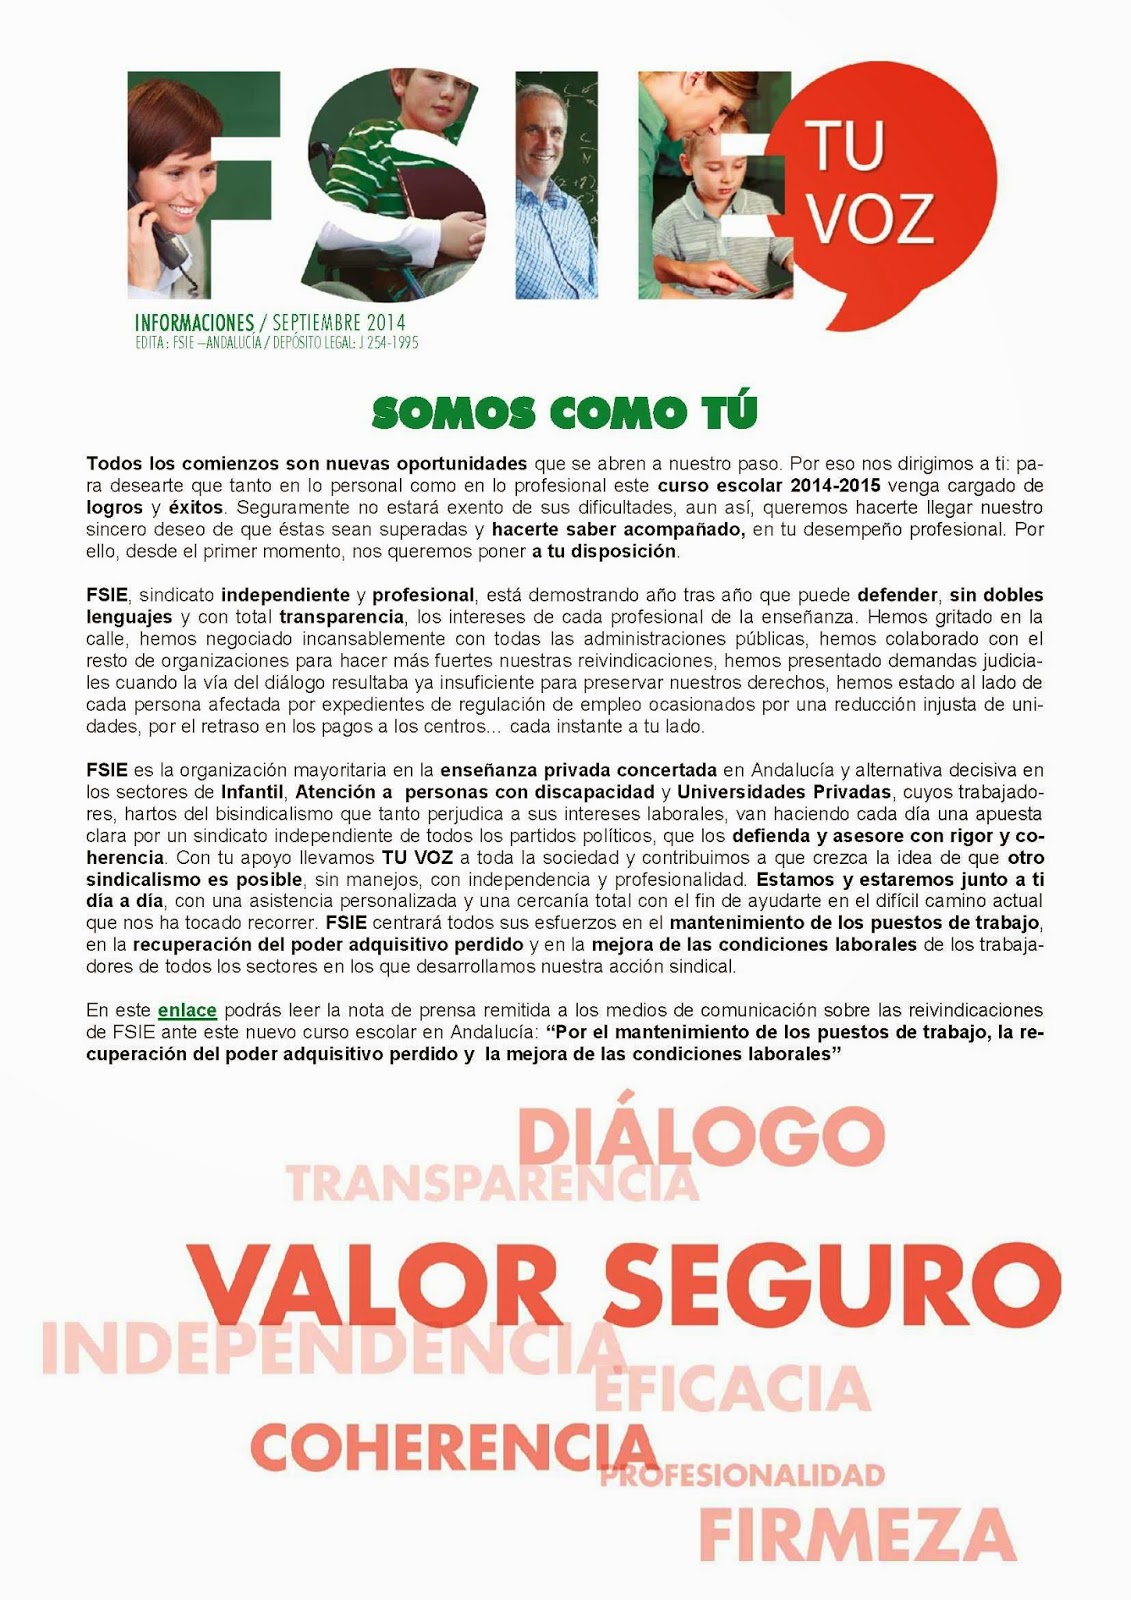 http://www.fsieandalucia.es/documentos/INFORMA/INFORMA_SEP14.pdf